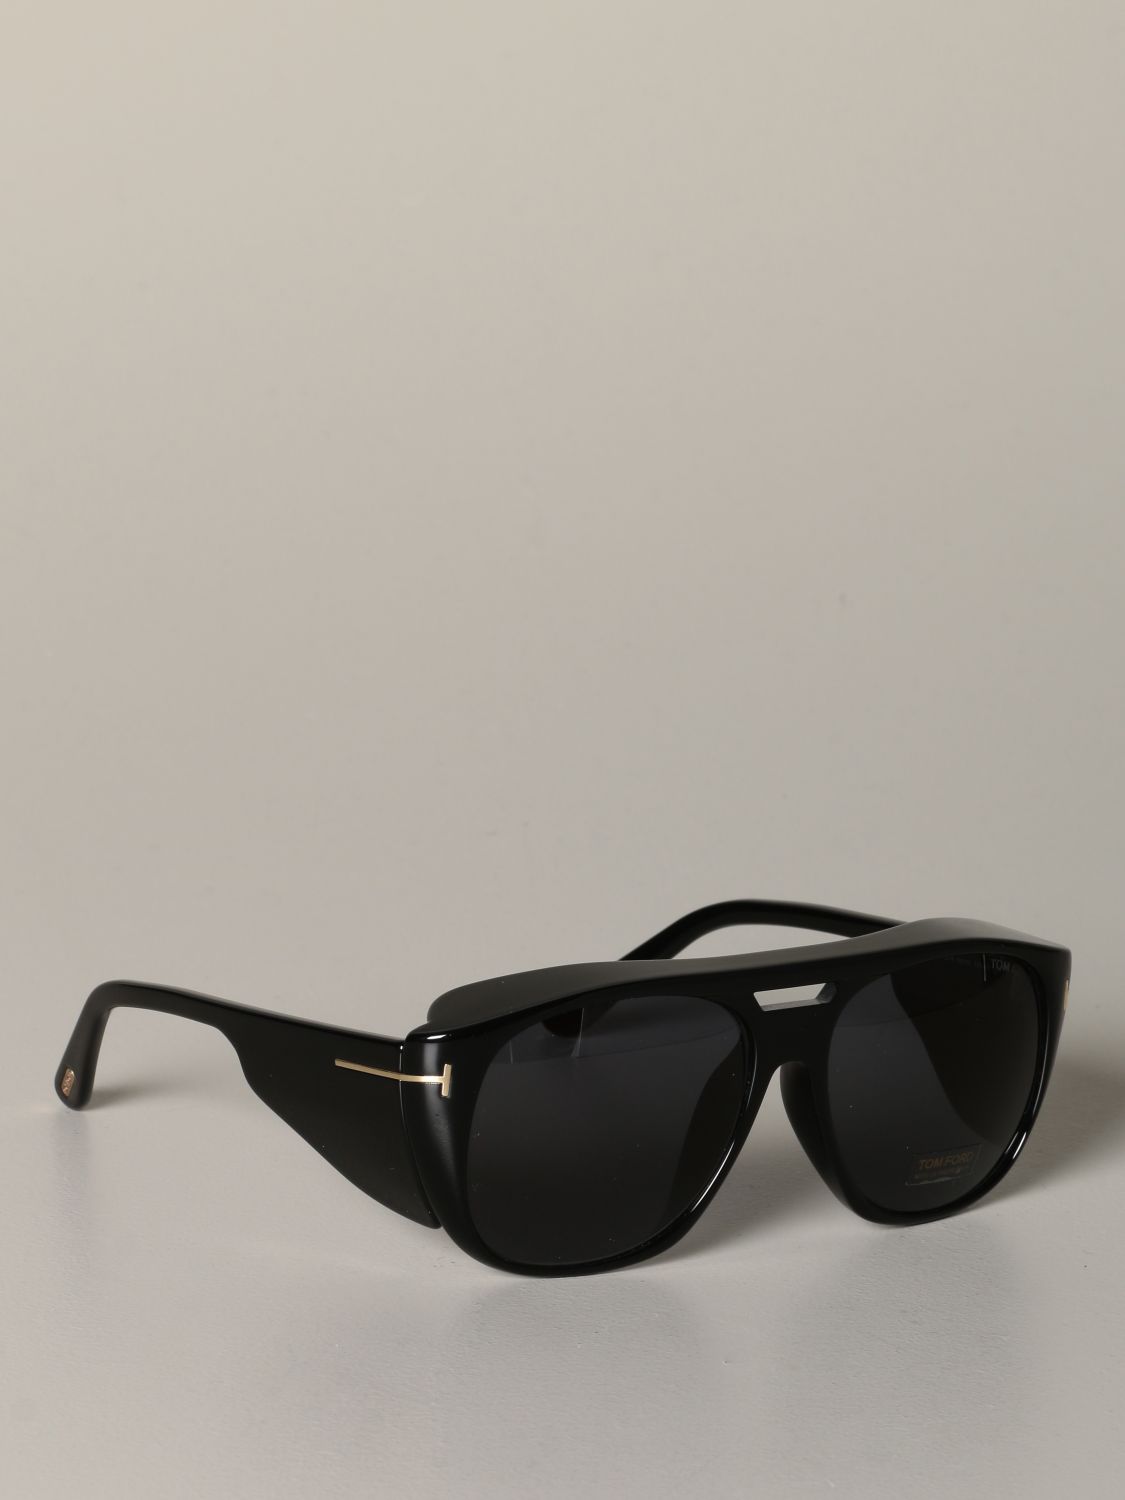 Tom Ford Outlet: acetate sunglasses - Black | Tom Ford sunglasses ...